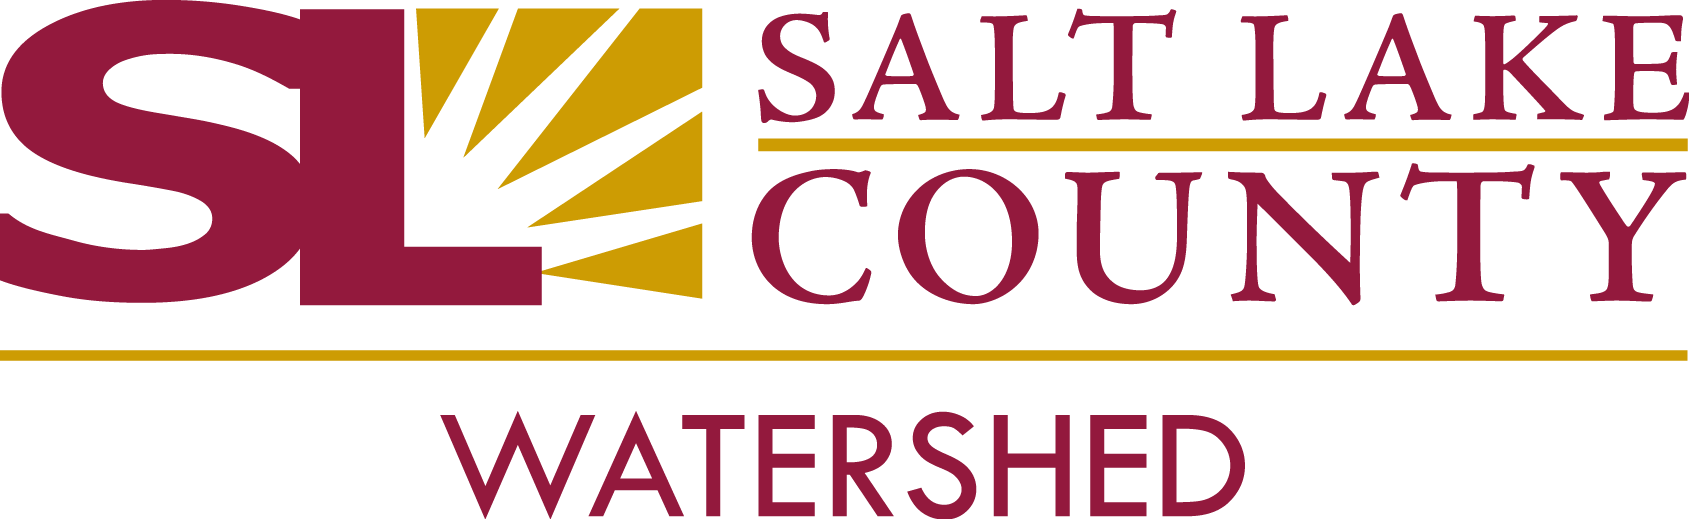 Salt Lake County Residents rain barrel program – Rain Water Solutions Inc.